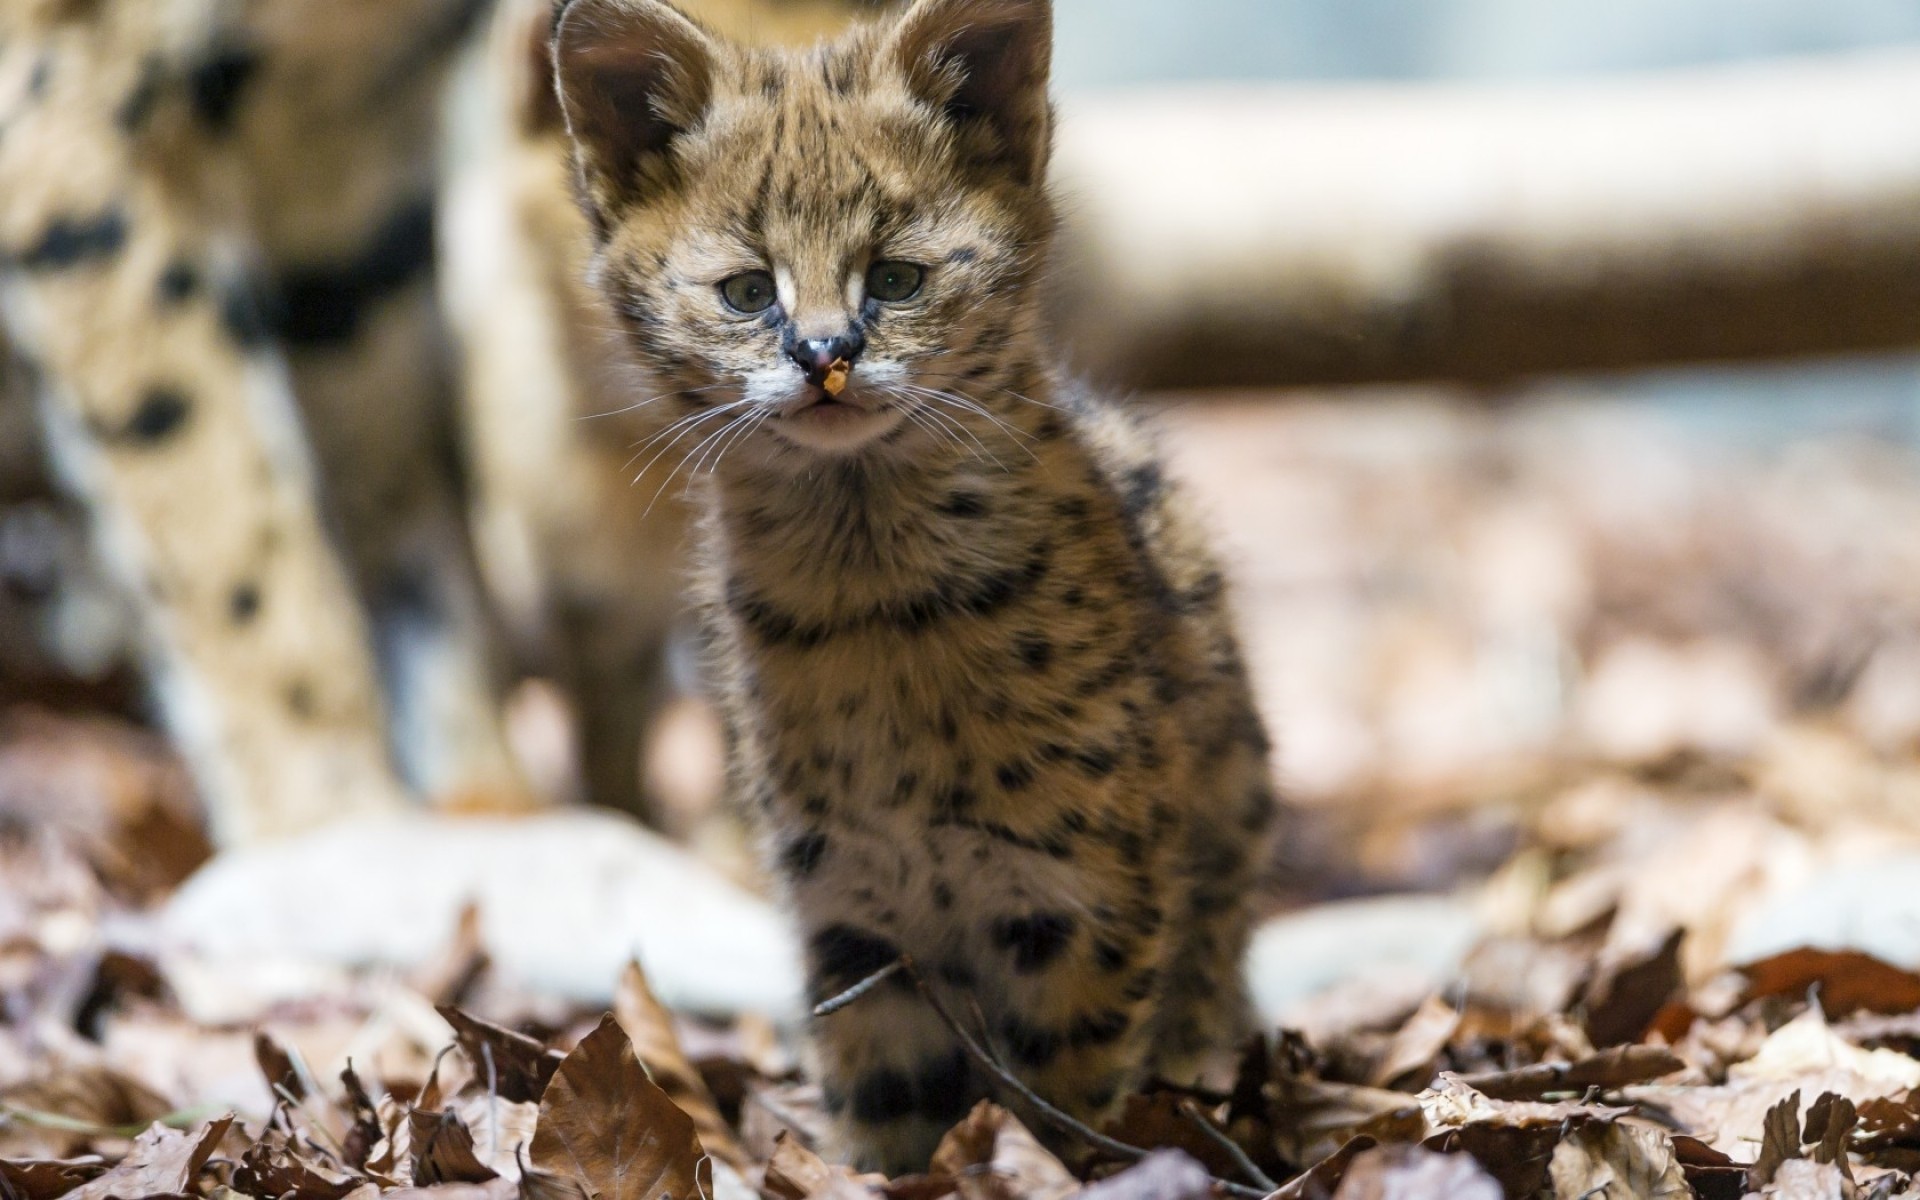 animals nature wildlife outdoors mammal cat jaguar baby cub kitten